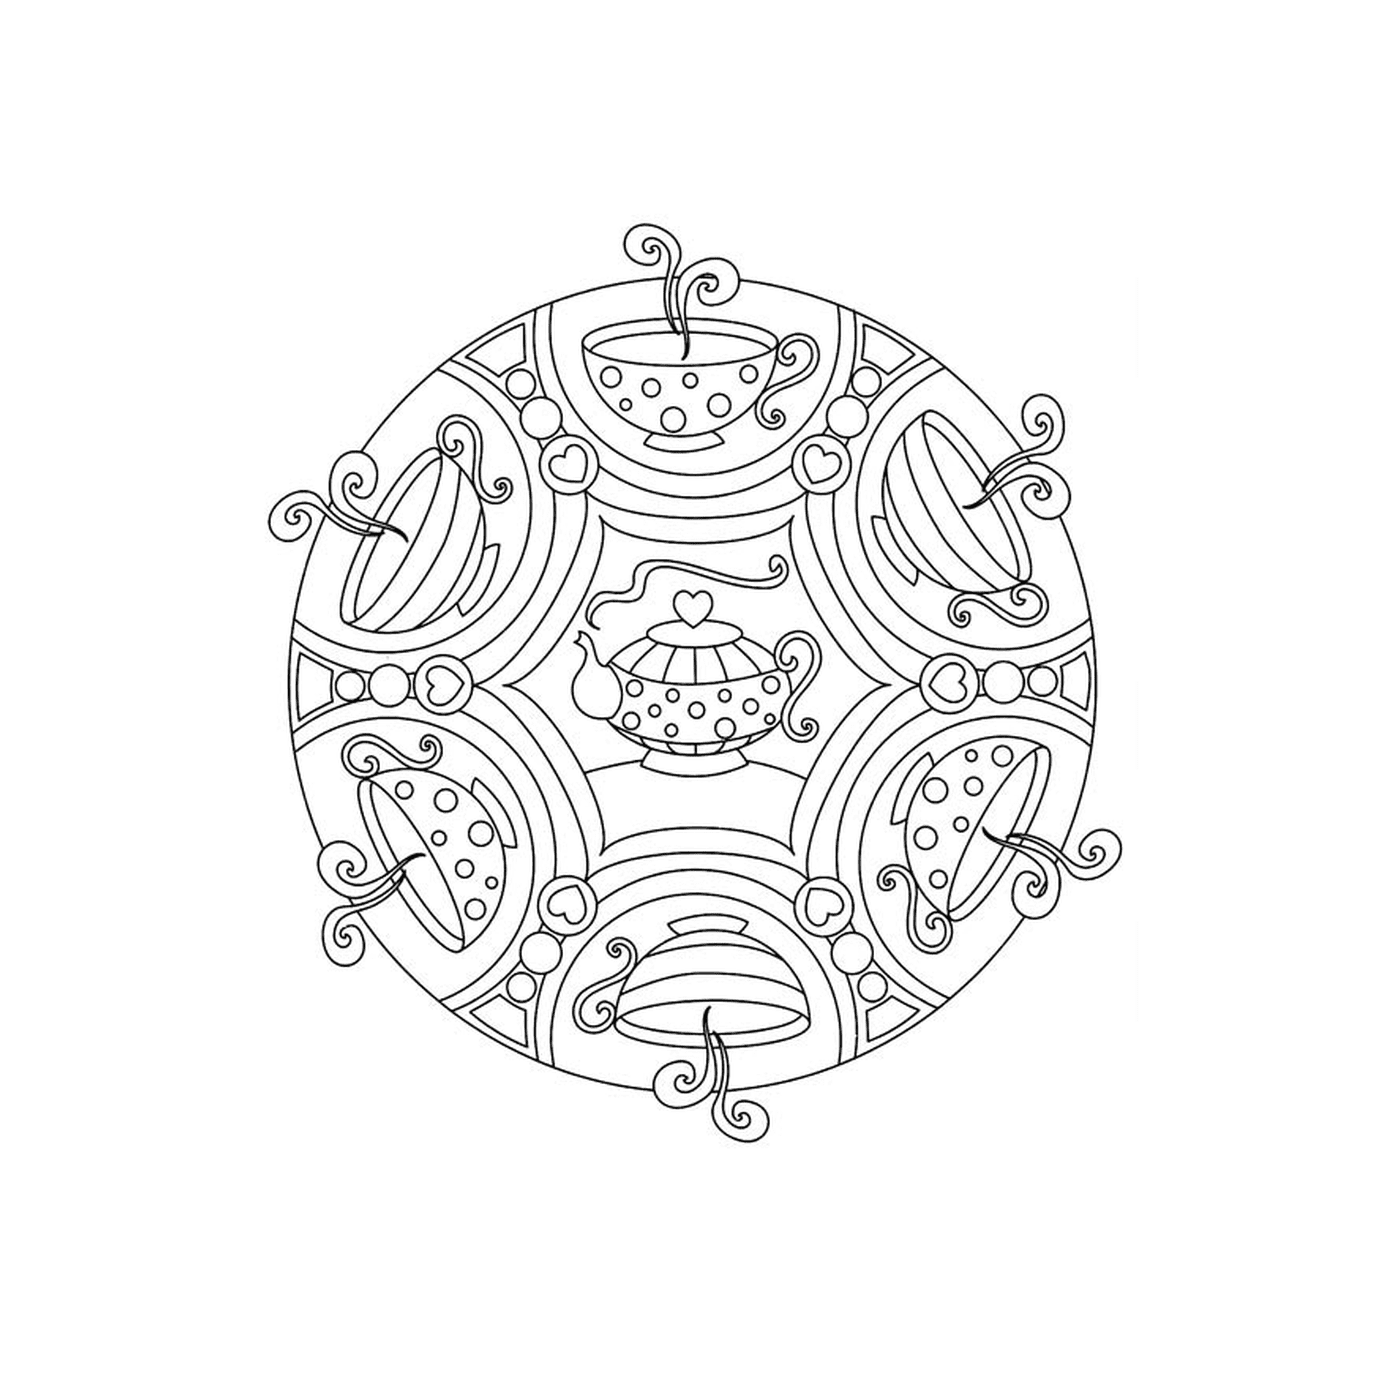  Magic Mandala, Mysterious Patterns 